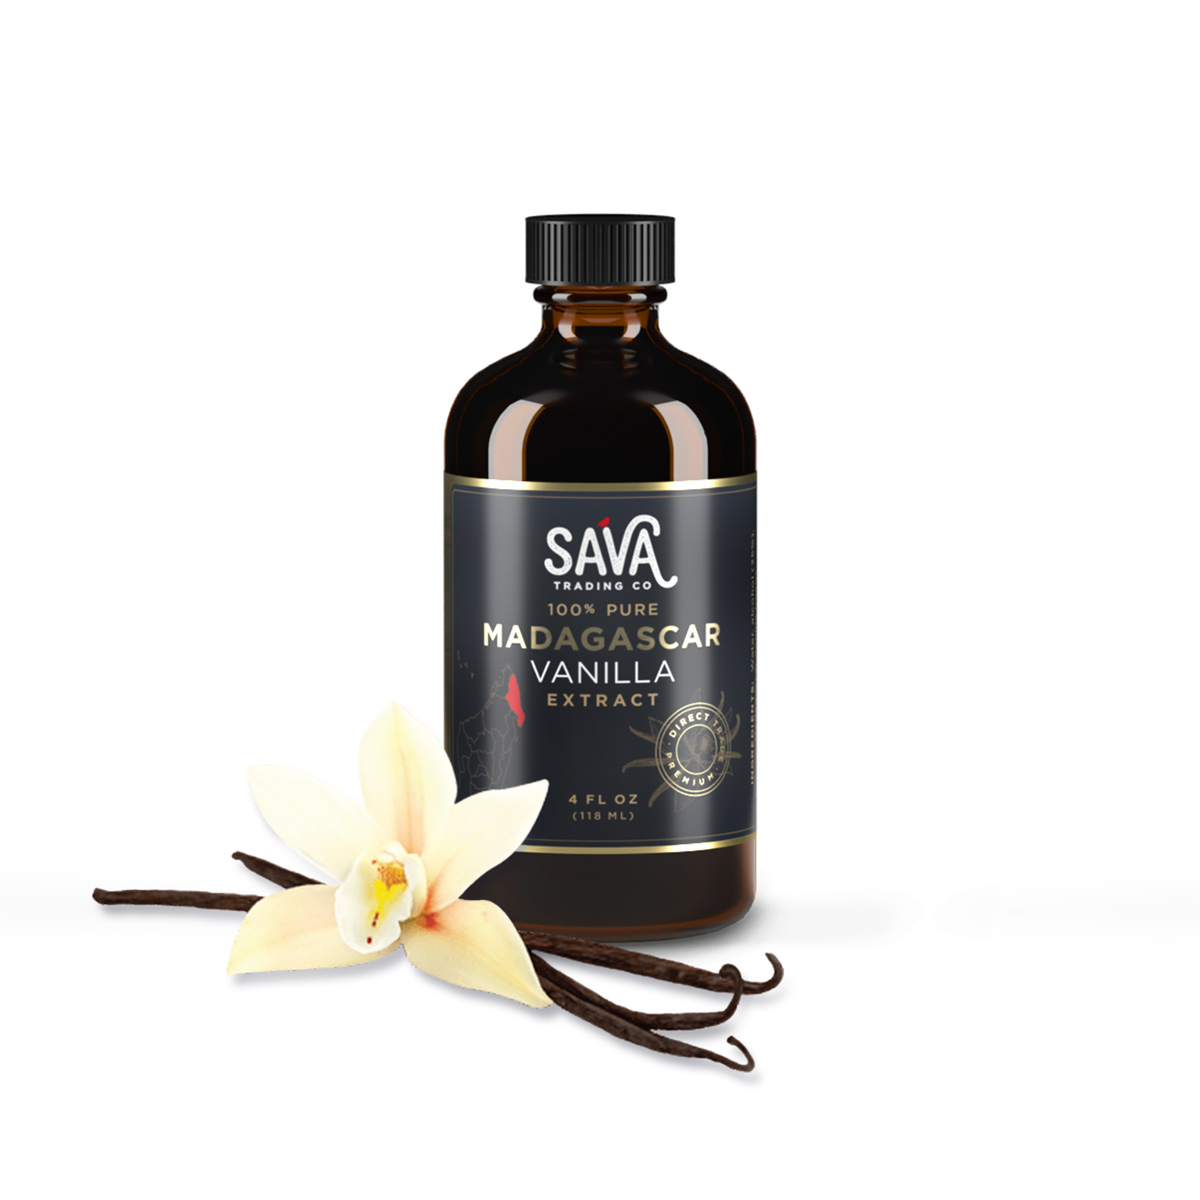 SAVA-Trading-Co-Madagascar-Vanilla-Extract-4oz-pure